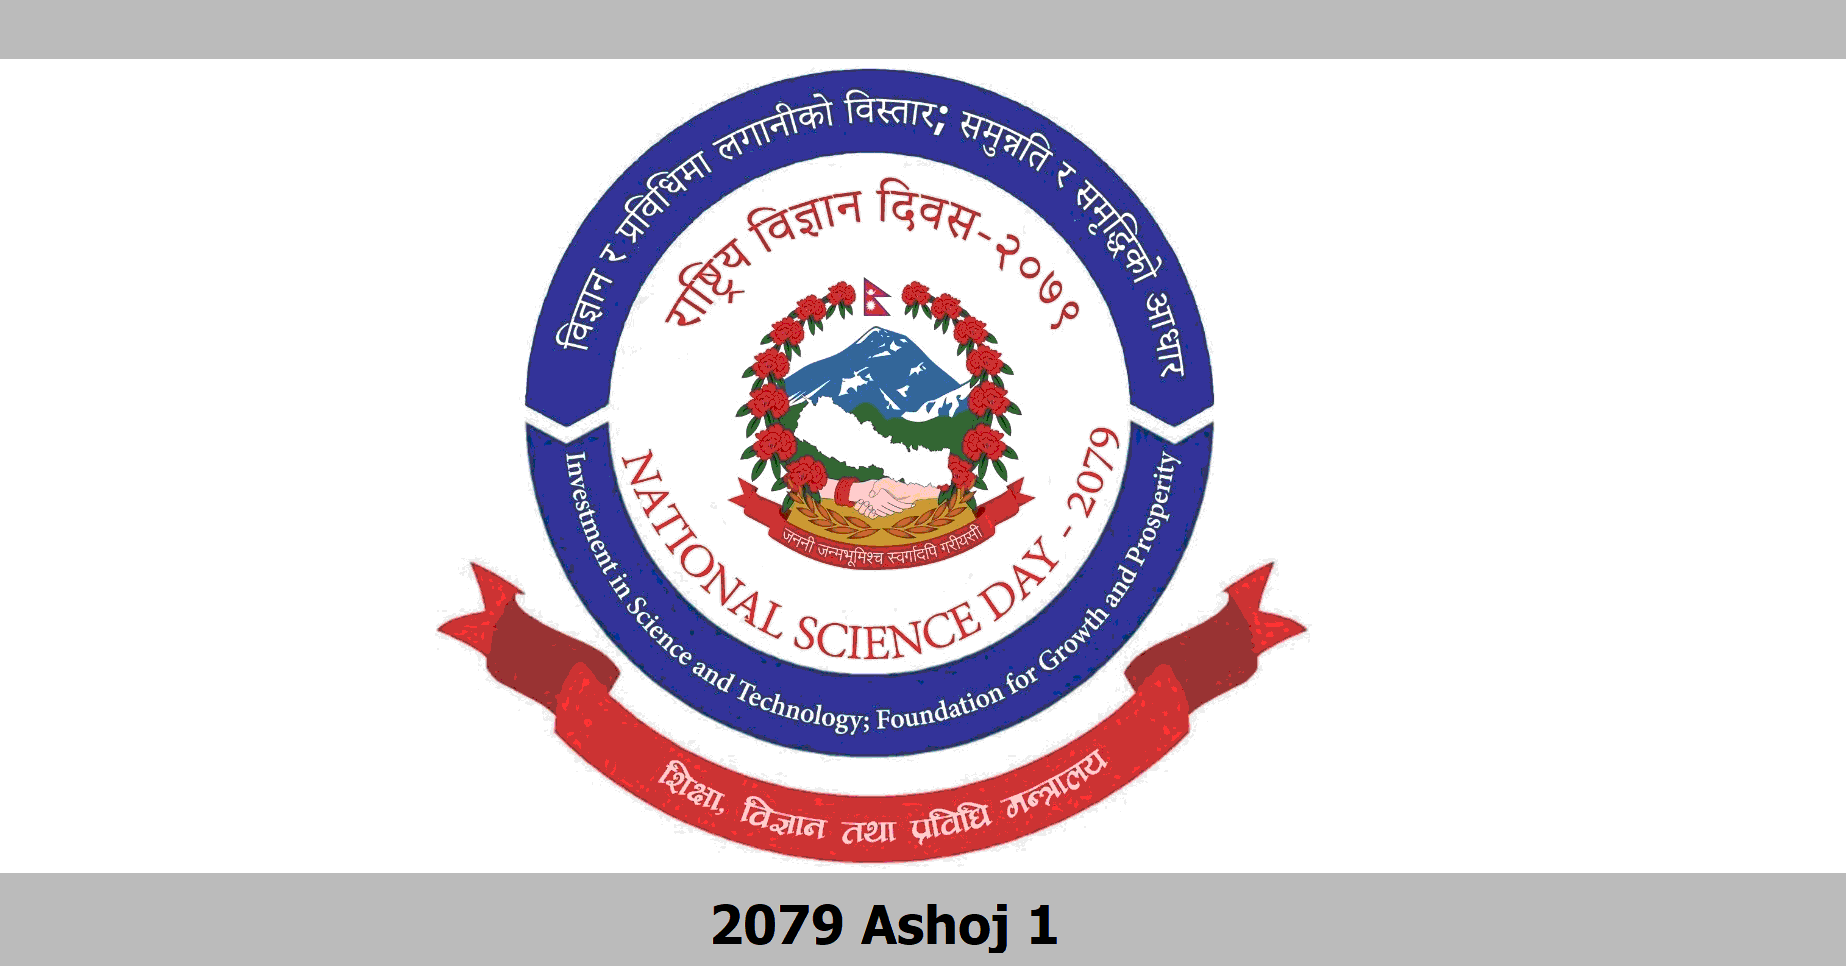 10th National Science Day 2079 Ashoj 1